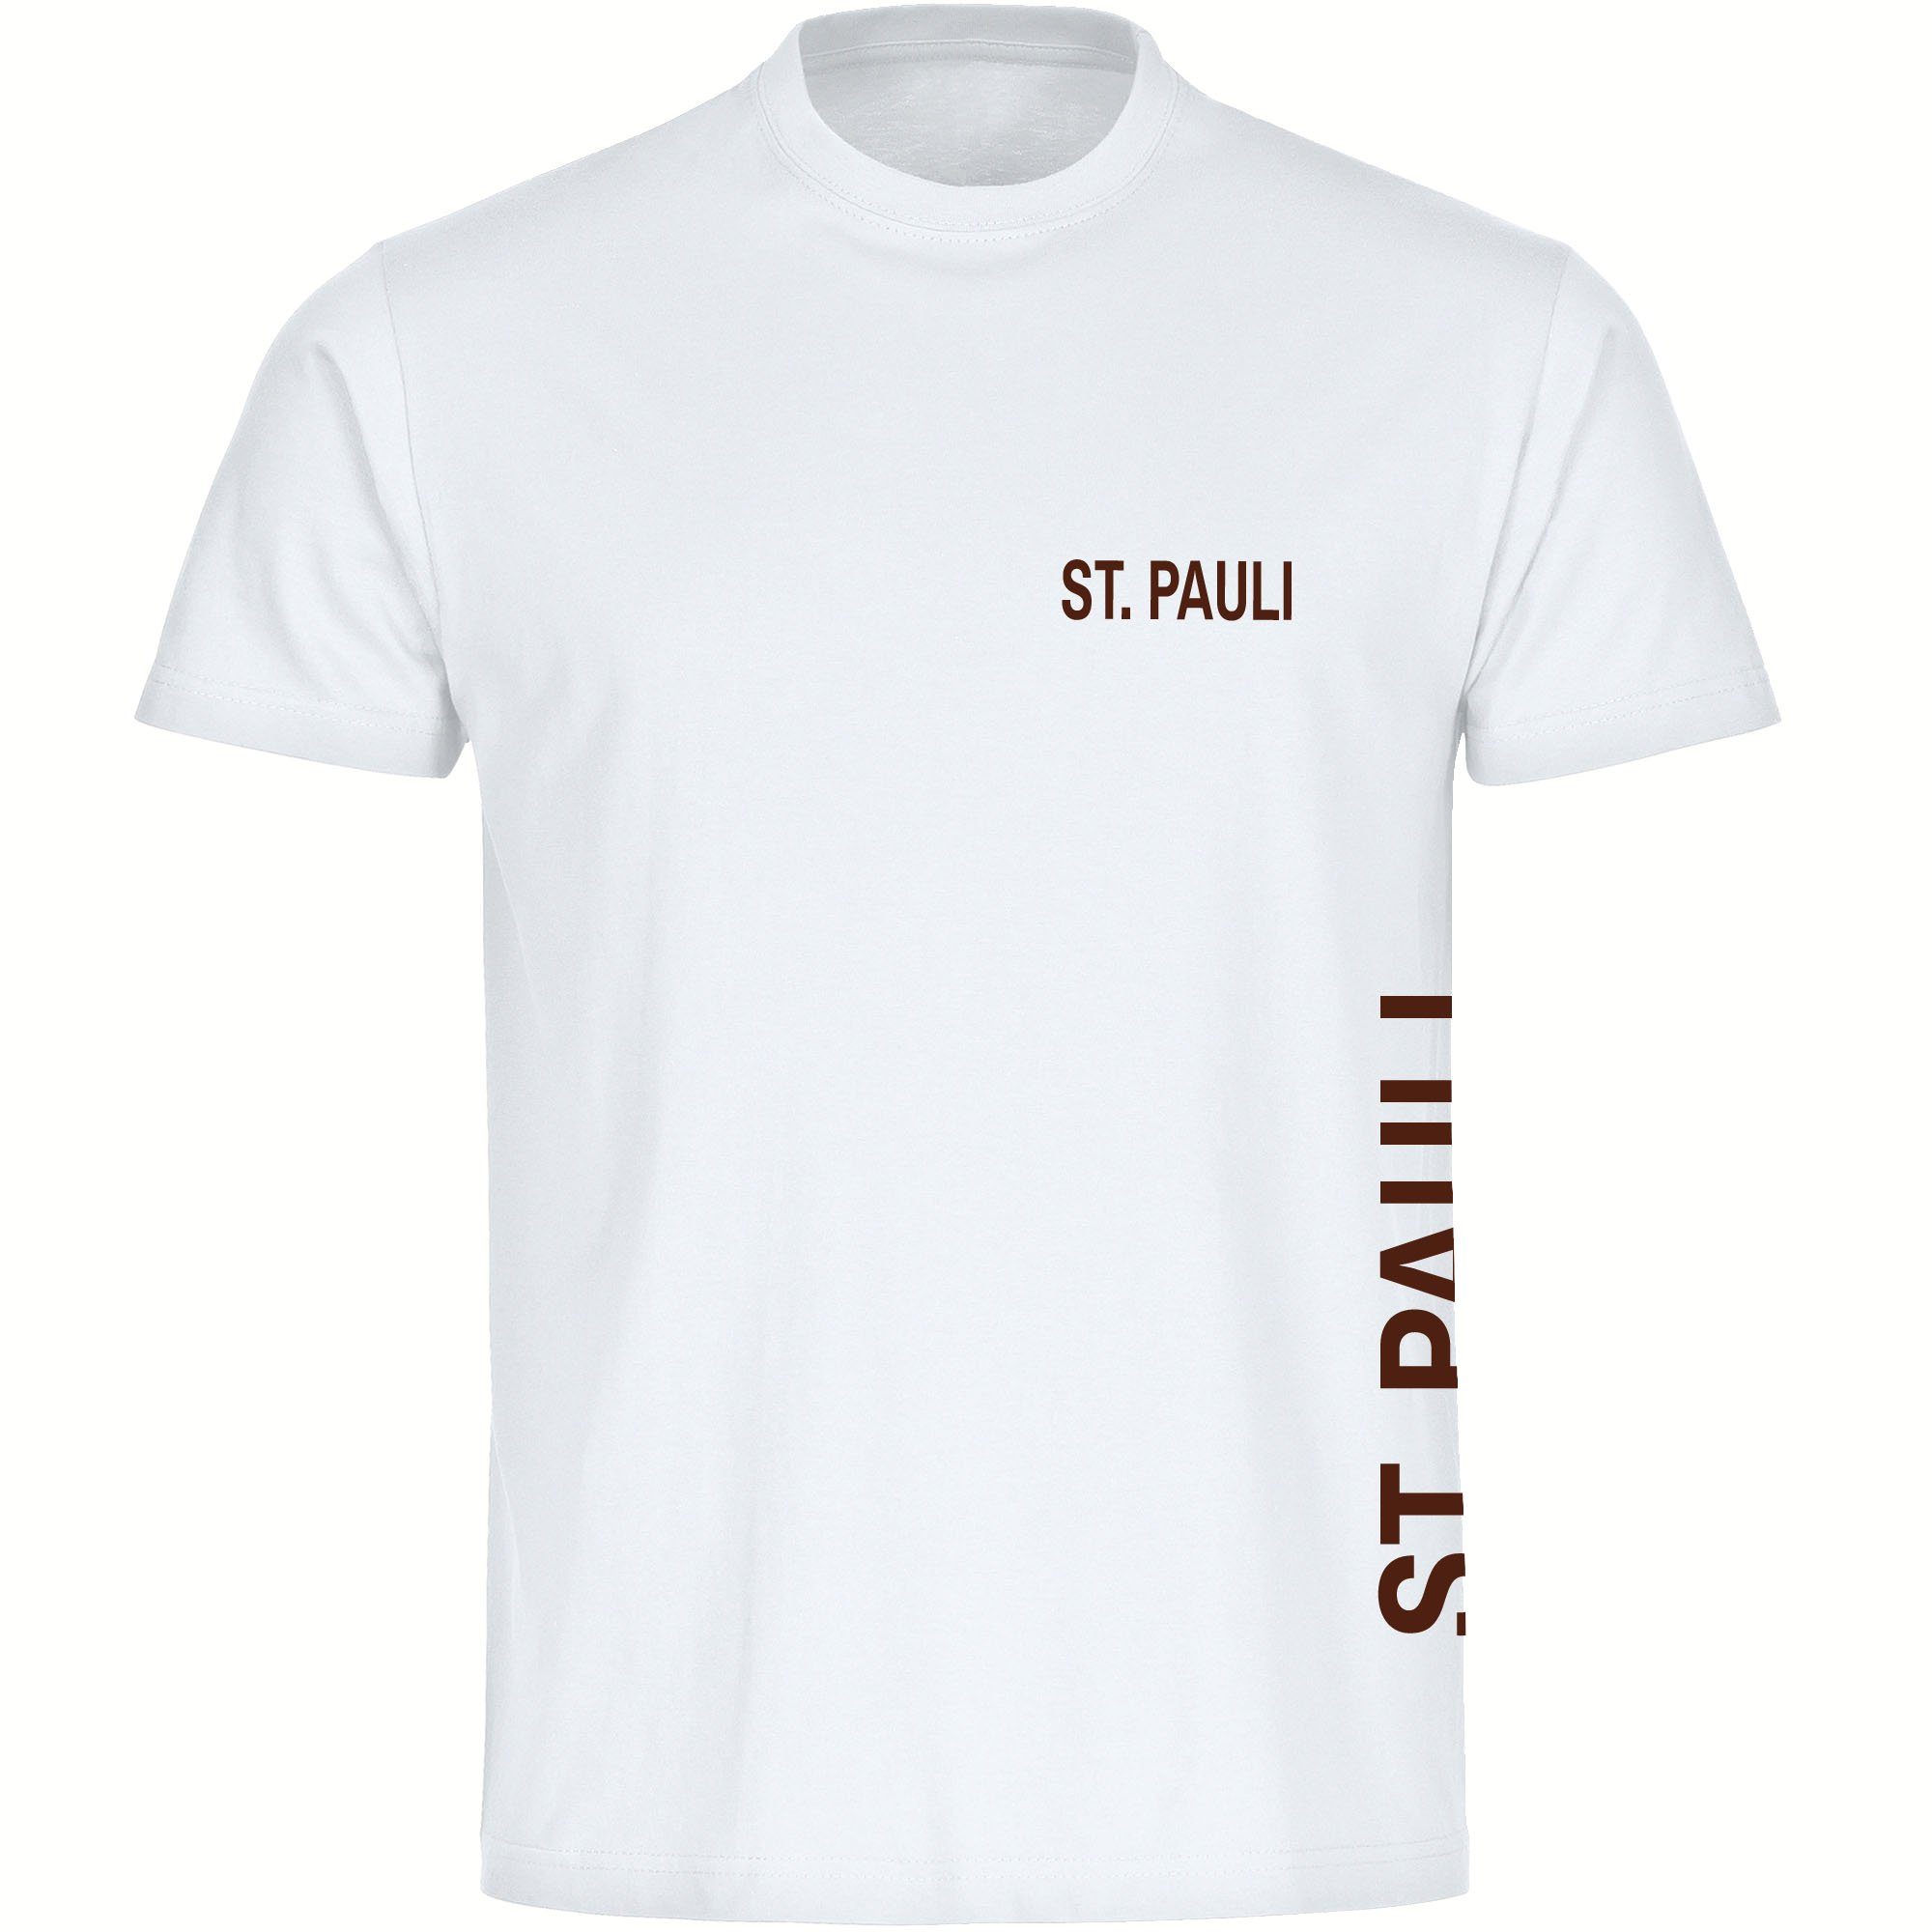 multifanshop T-Shirt Kinder St. Pauli - Brust & Seite - Boy Girl